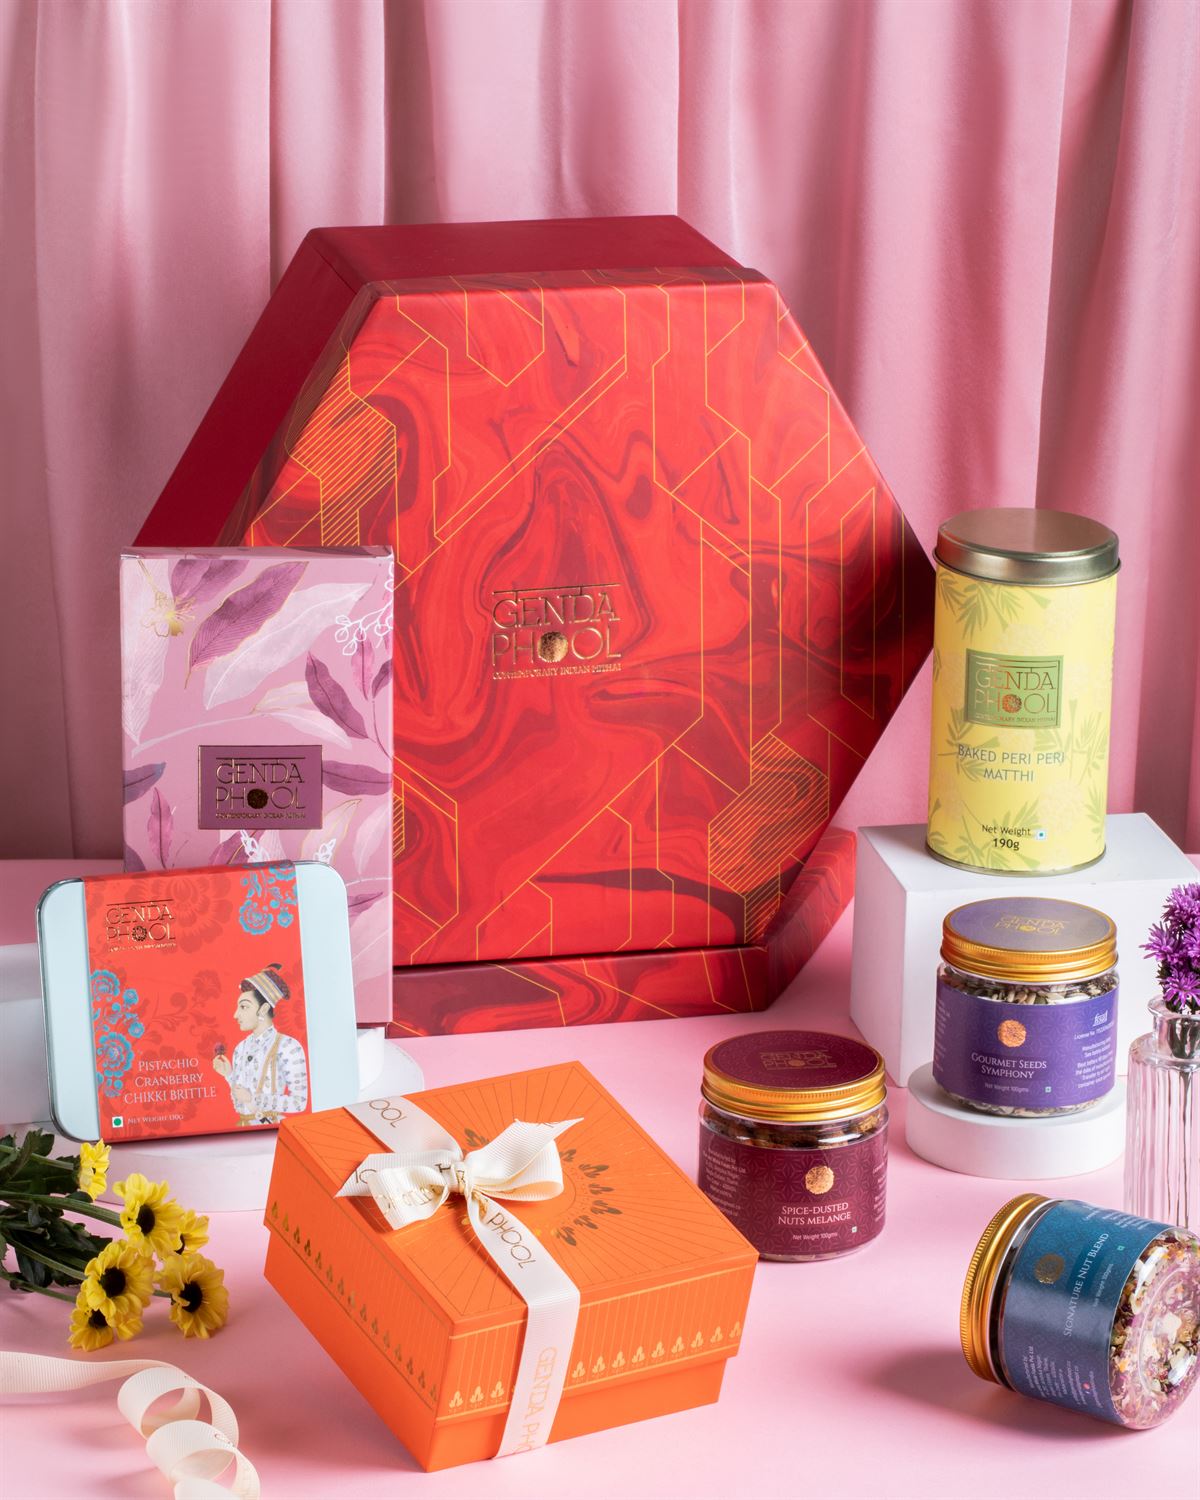 Genda Phool Signature Gift Box - 4 Piece Mithai Box